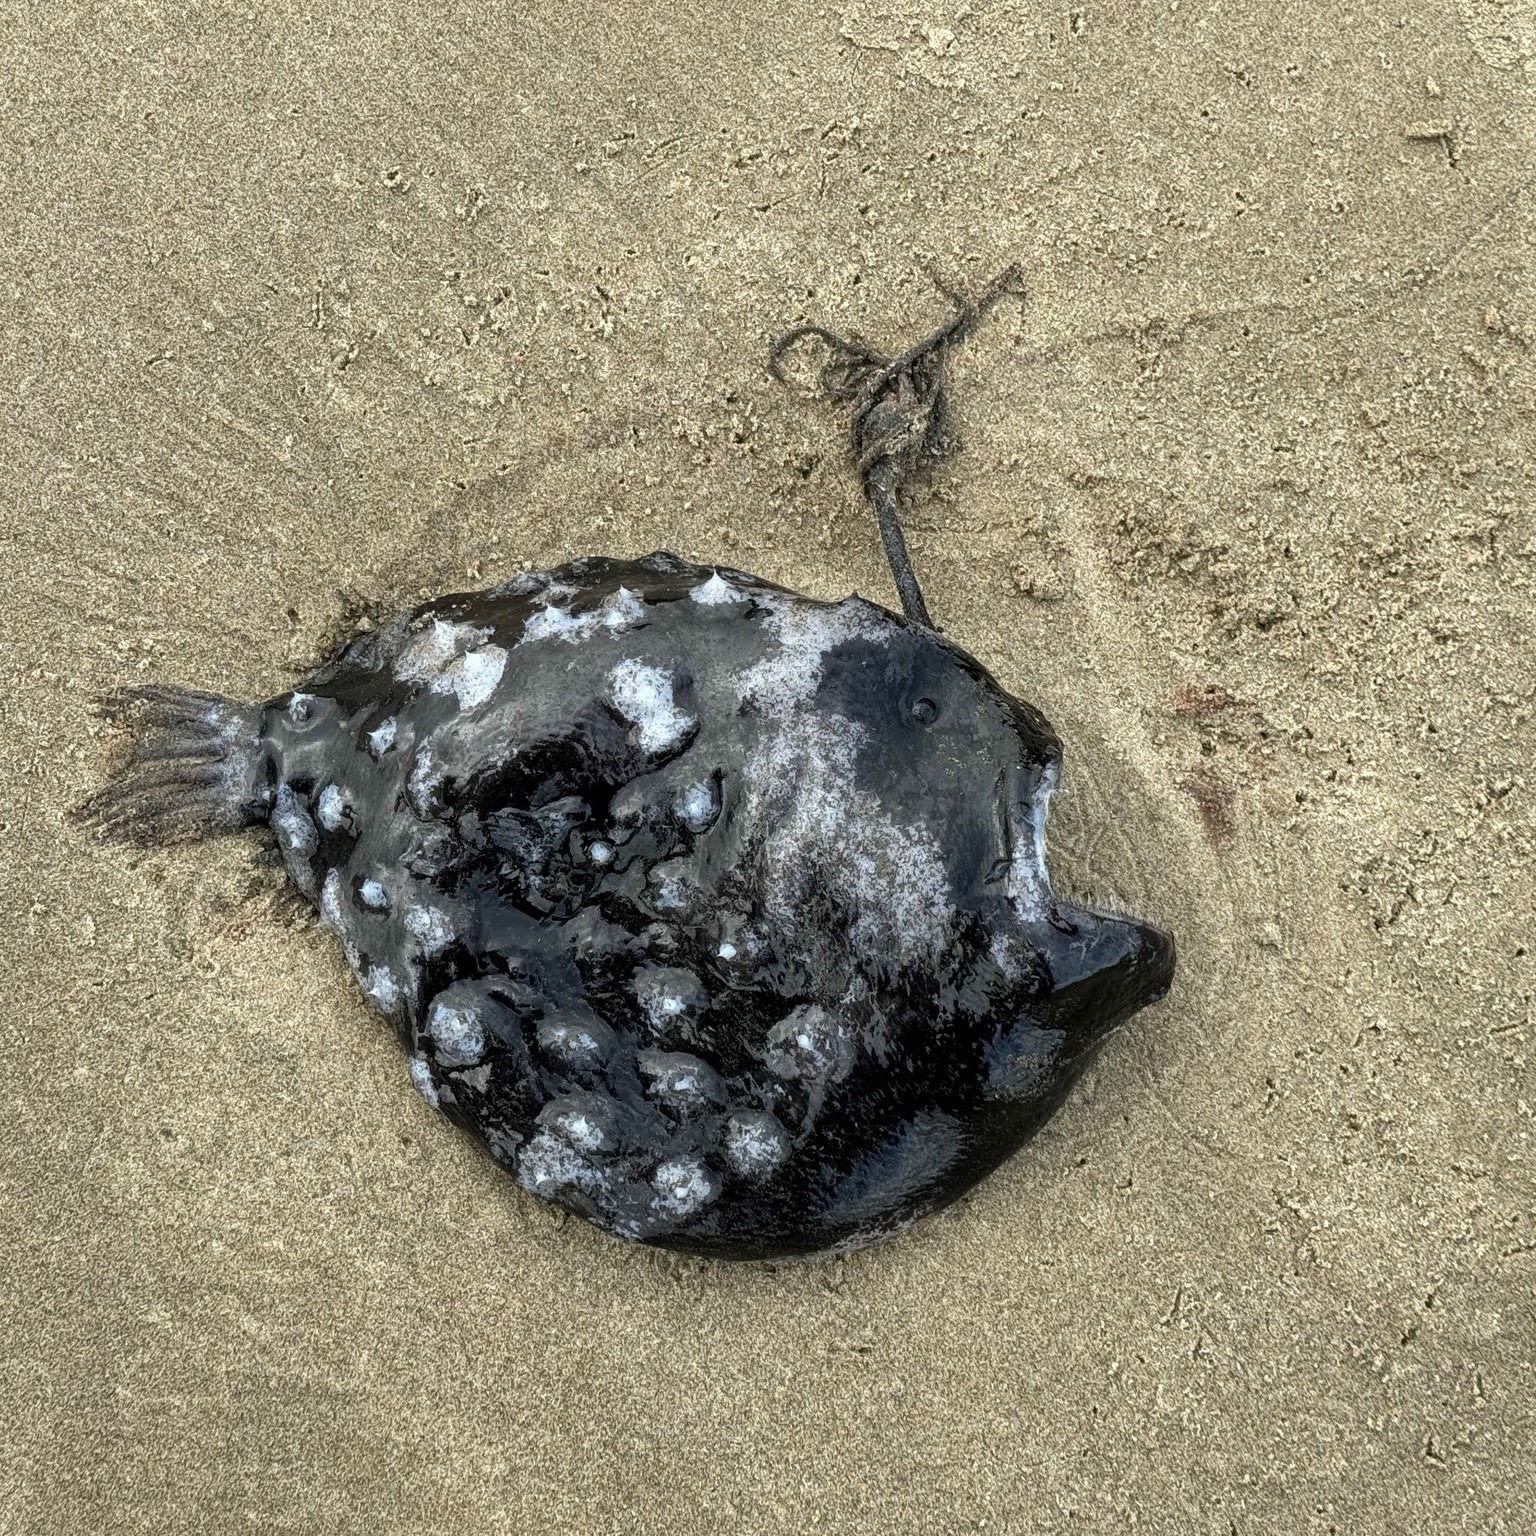 Beachcombers Discover Rare, Deep-Sea Anglerfish Washed Up on Oregon Coast